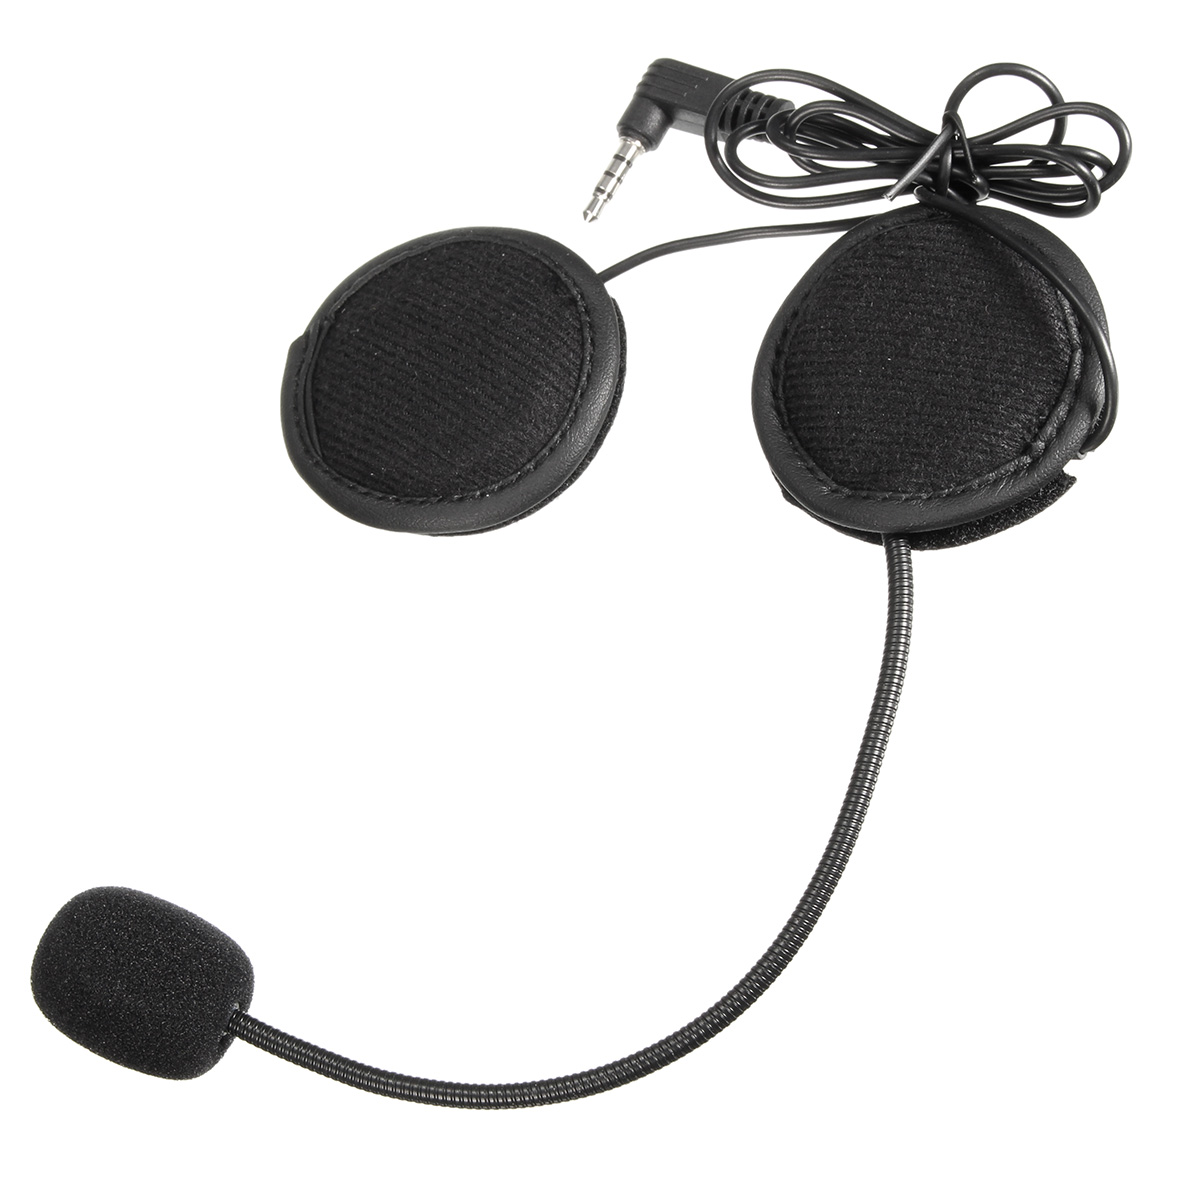 Headset Earphone For 1000M Motorcycle Helmet Intercom Headset With Bluetooth Function